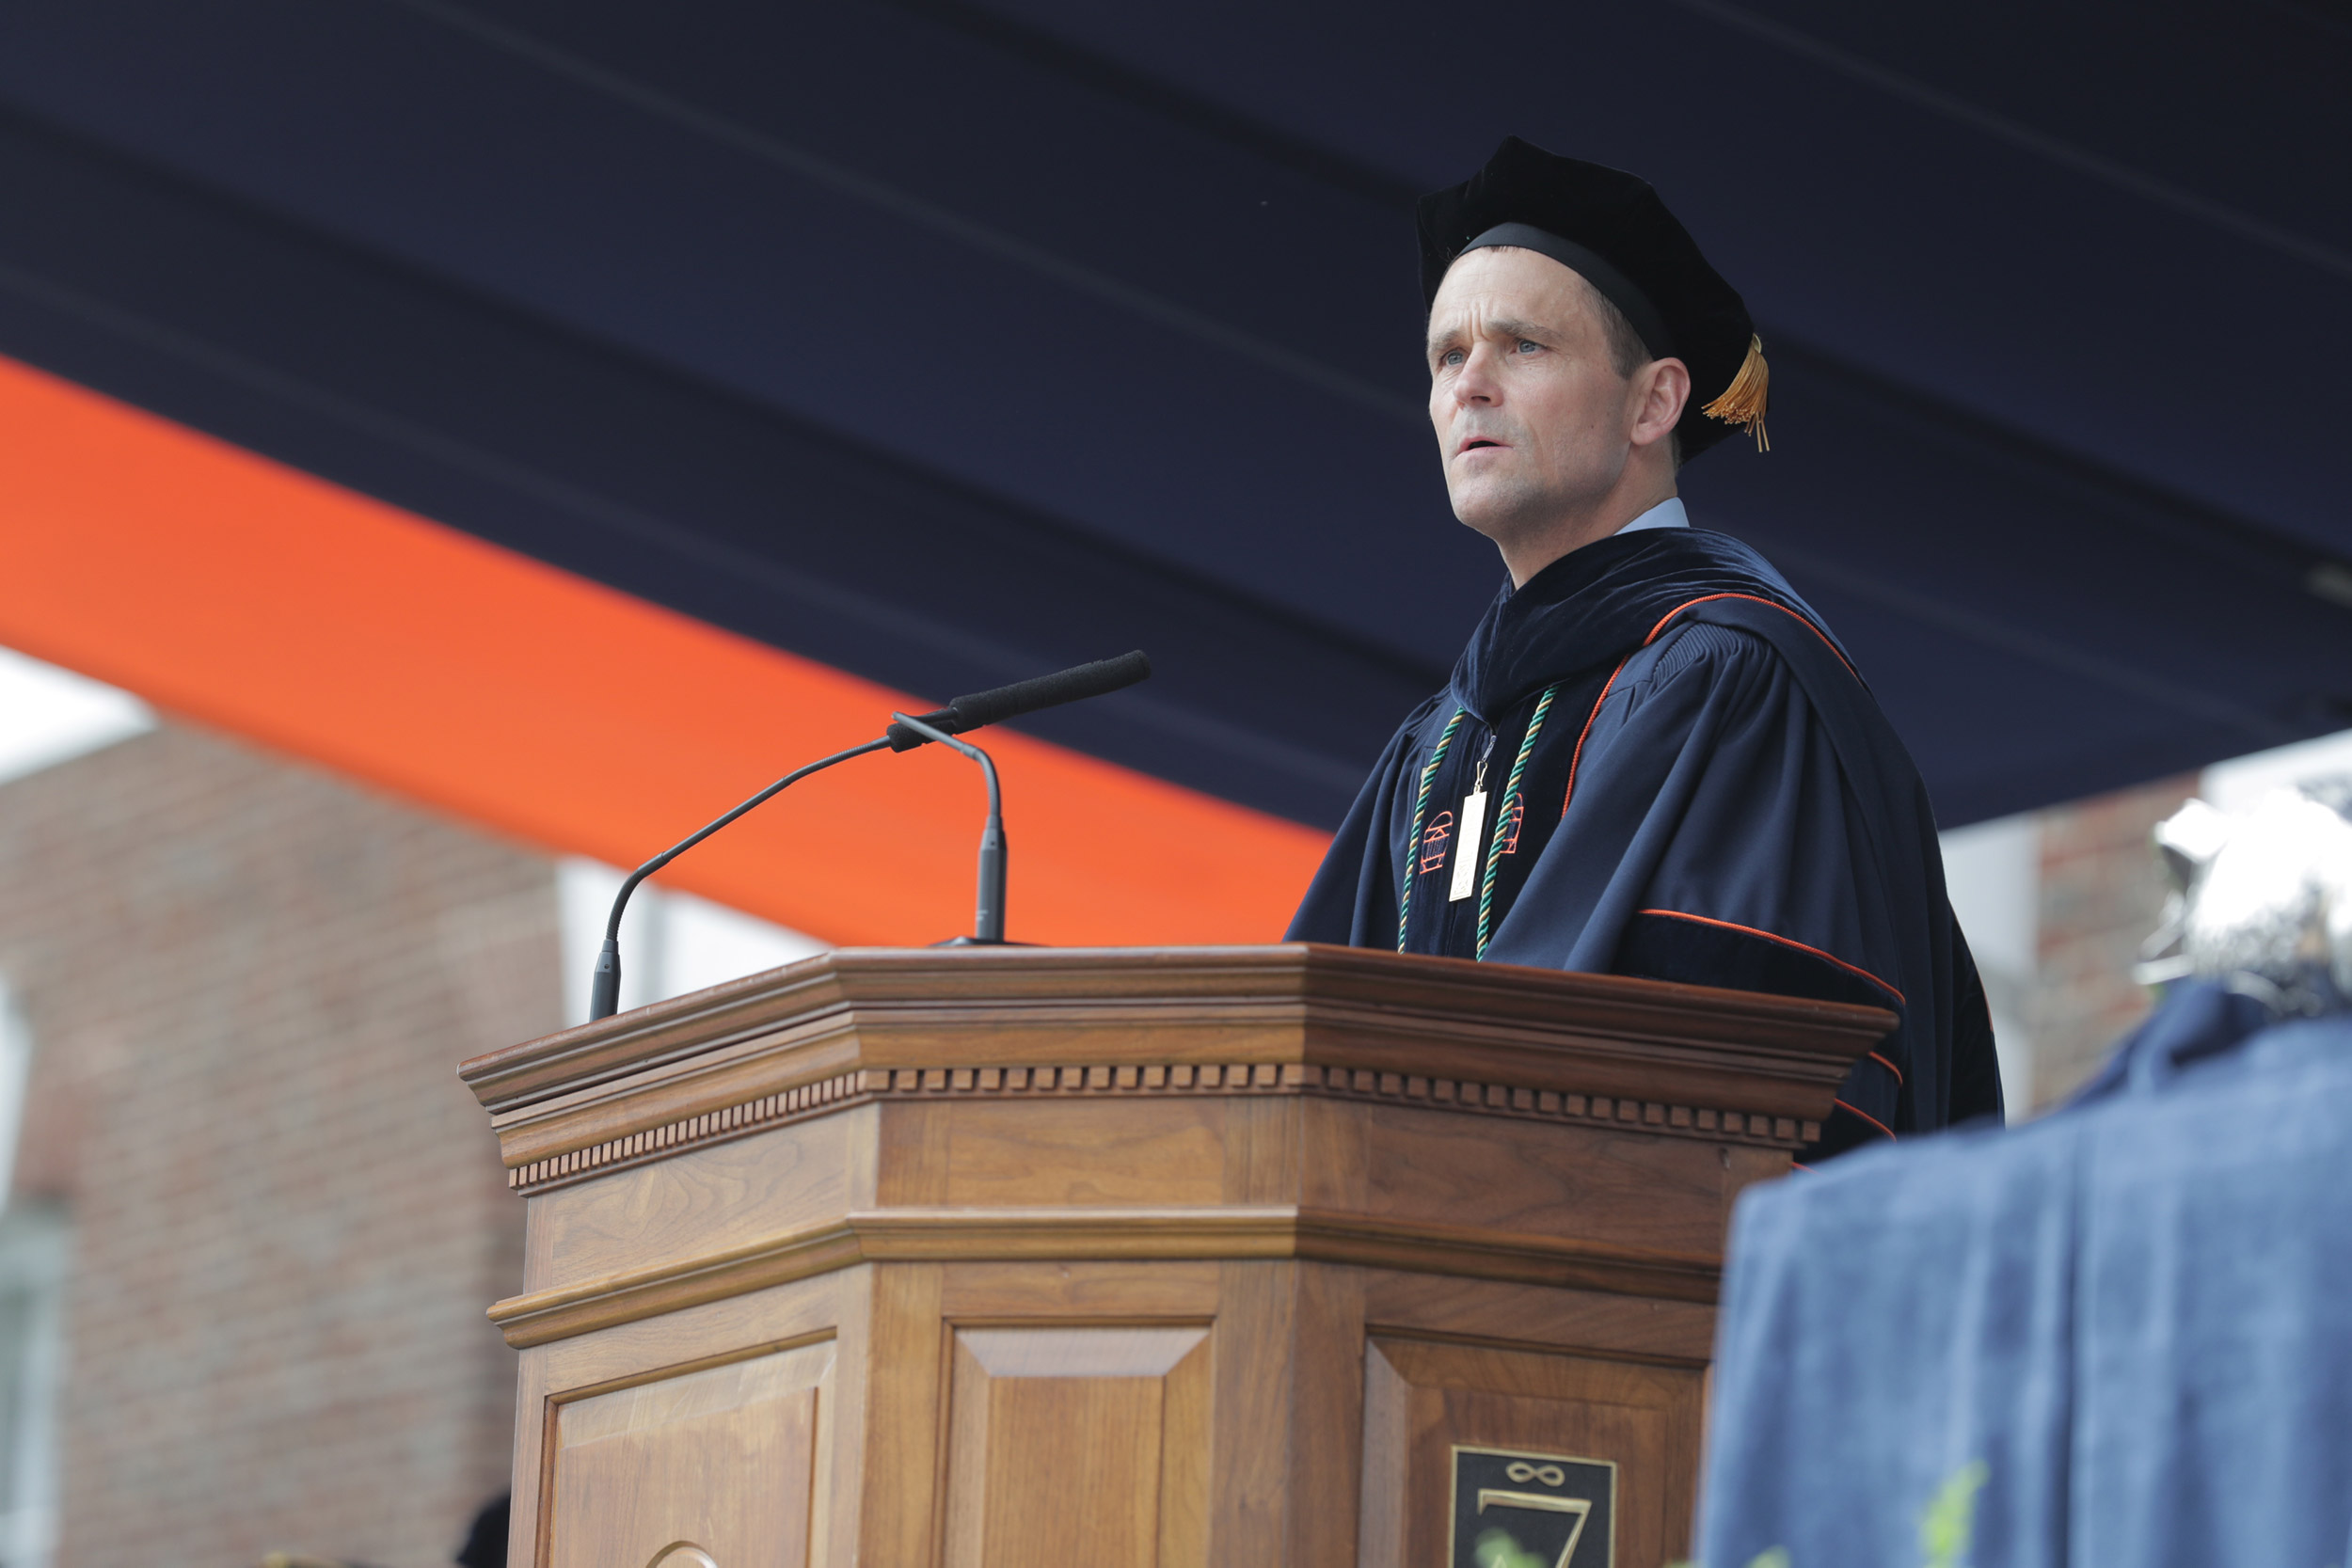 President Jim Ryan stands at a podium giving a speech